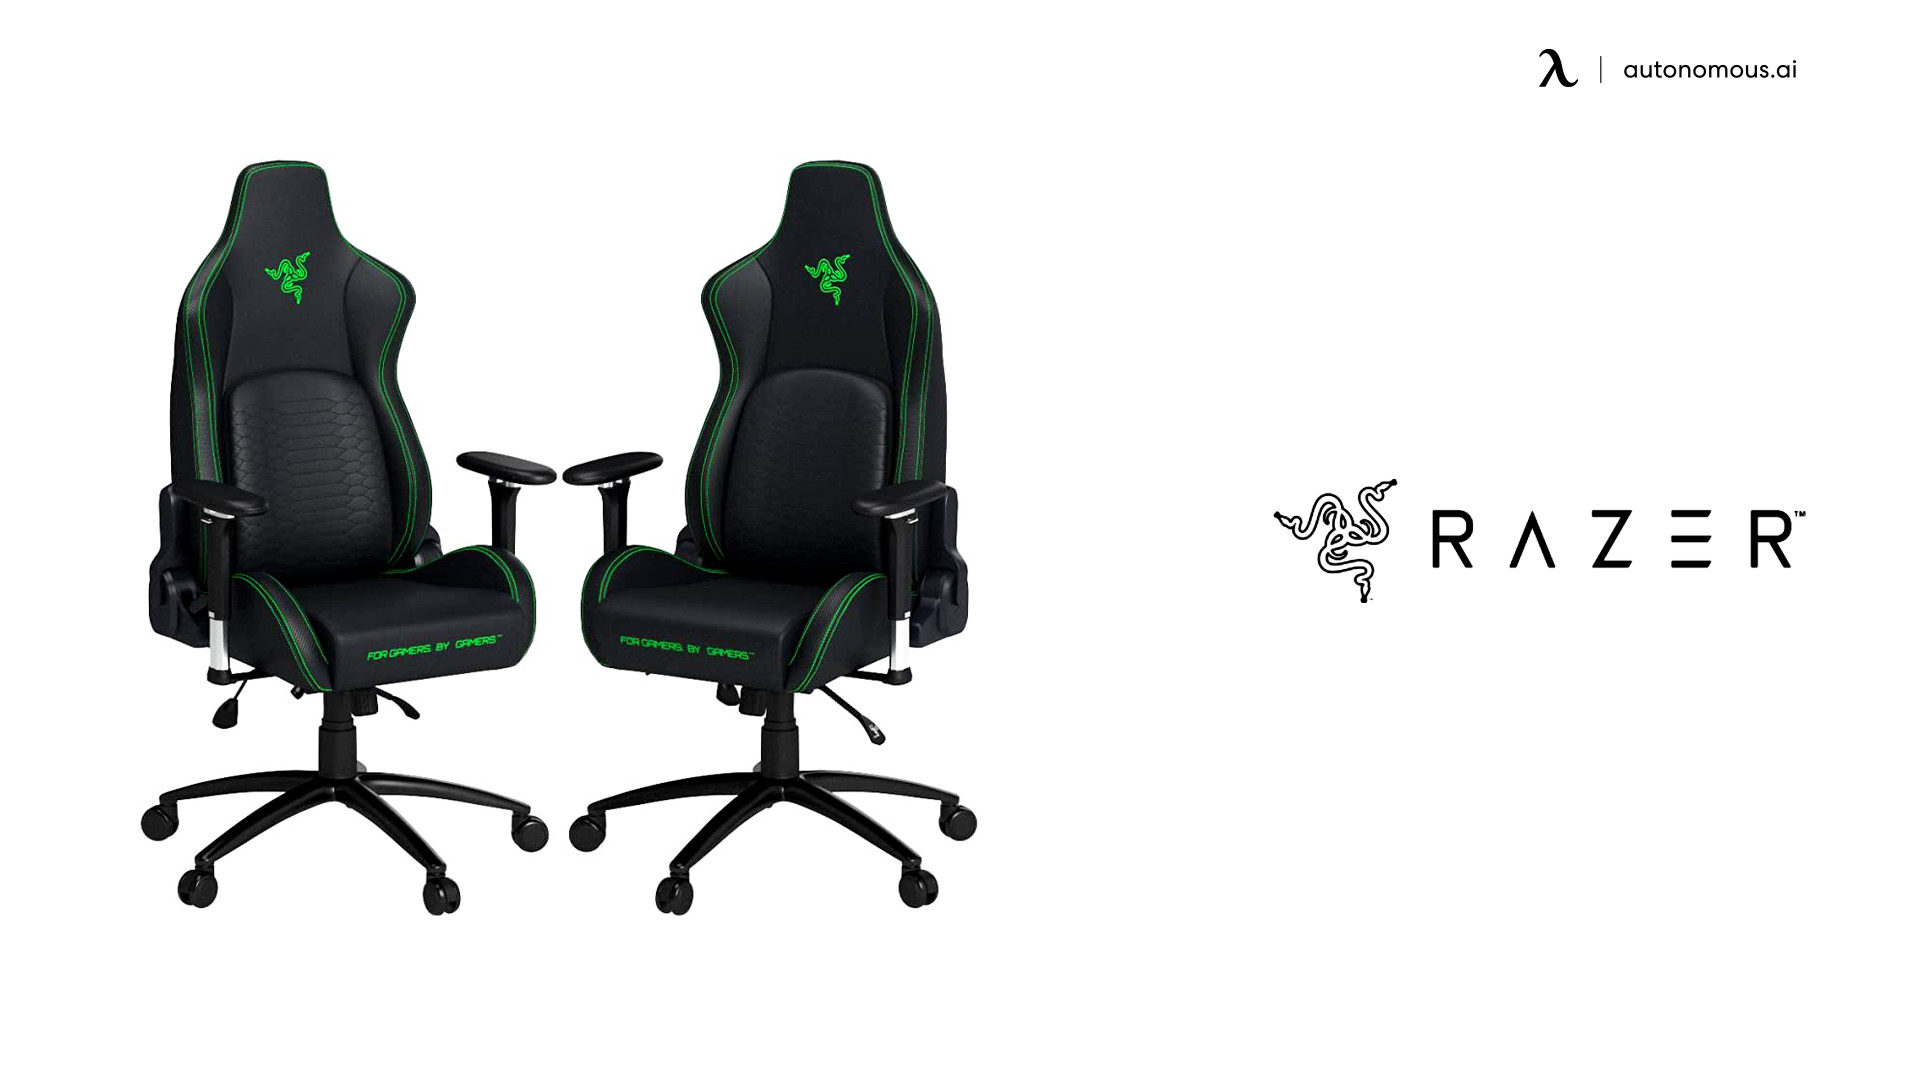 Razer gaming chair brand